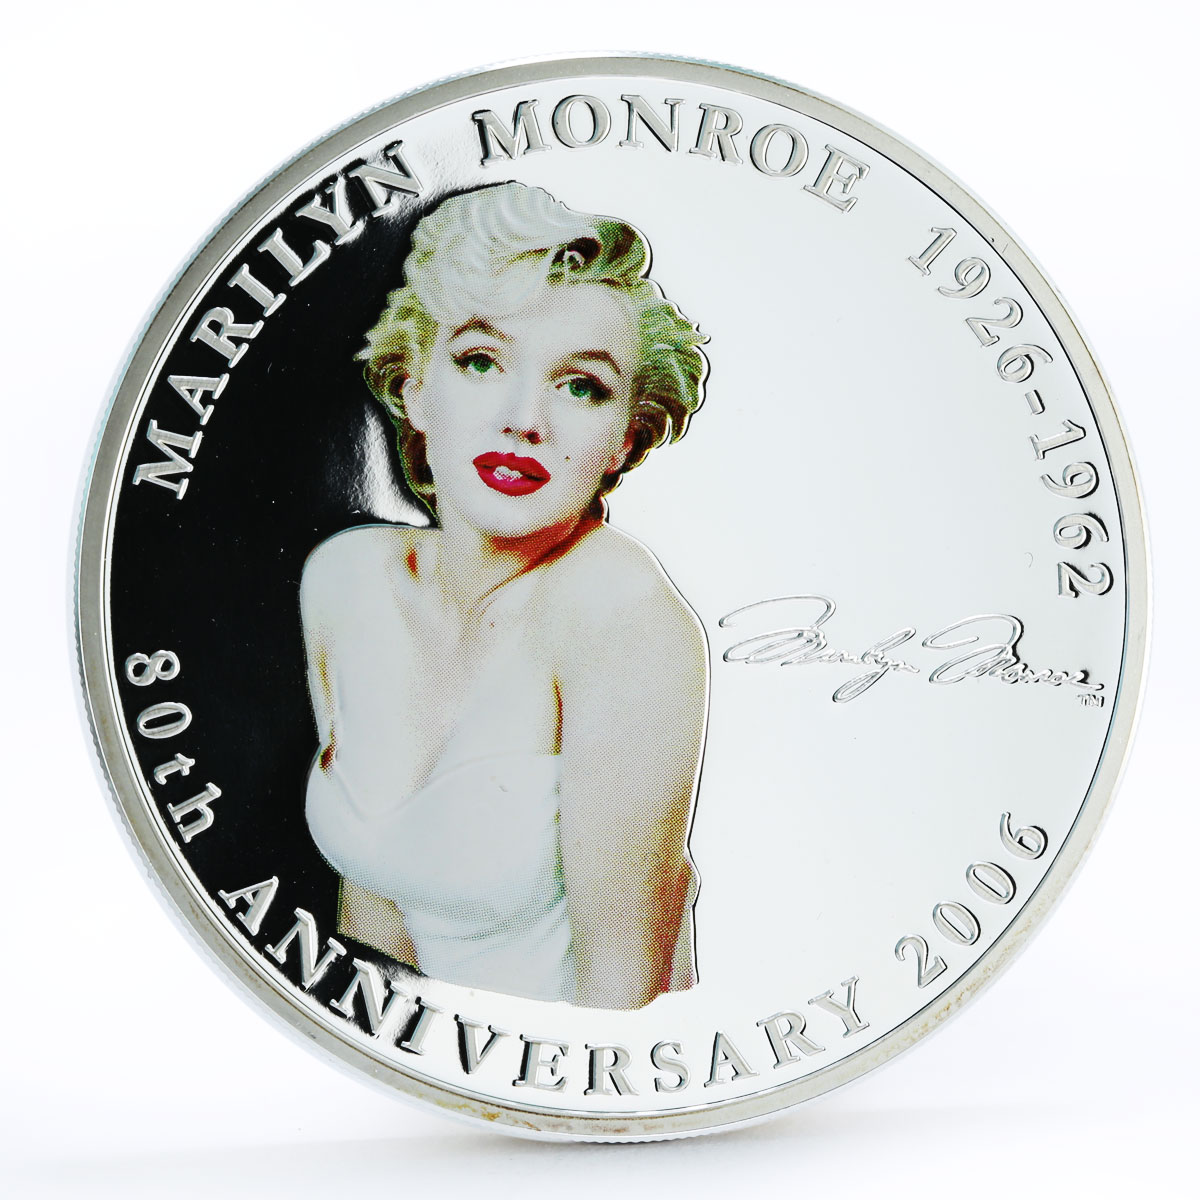 Liberia 100 dollars 80th Anniversary of Model Marilyn Monroe silver coin 2006